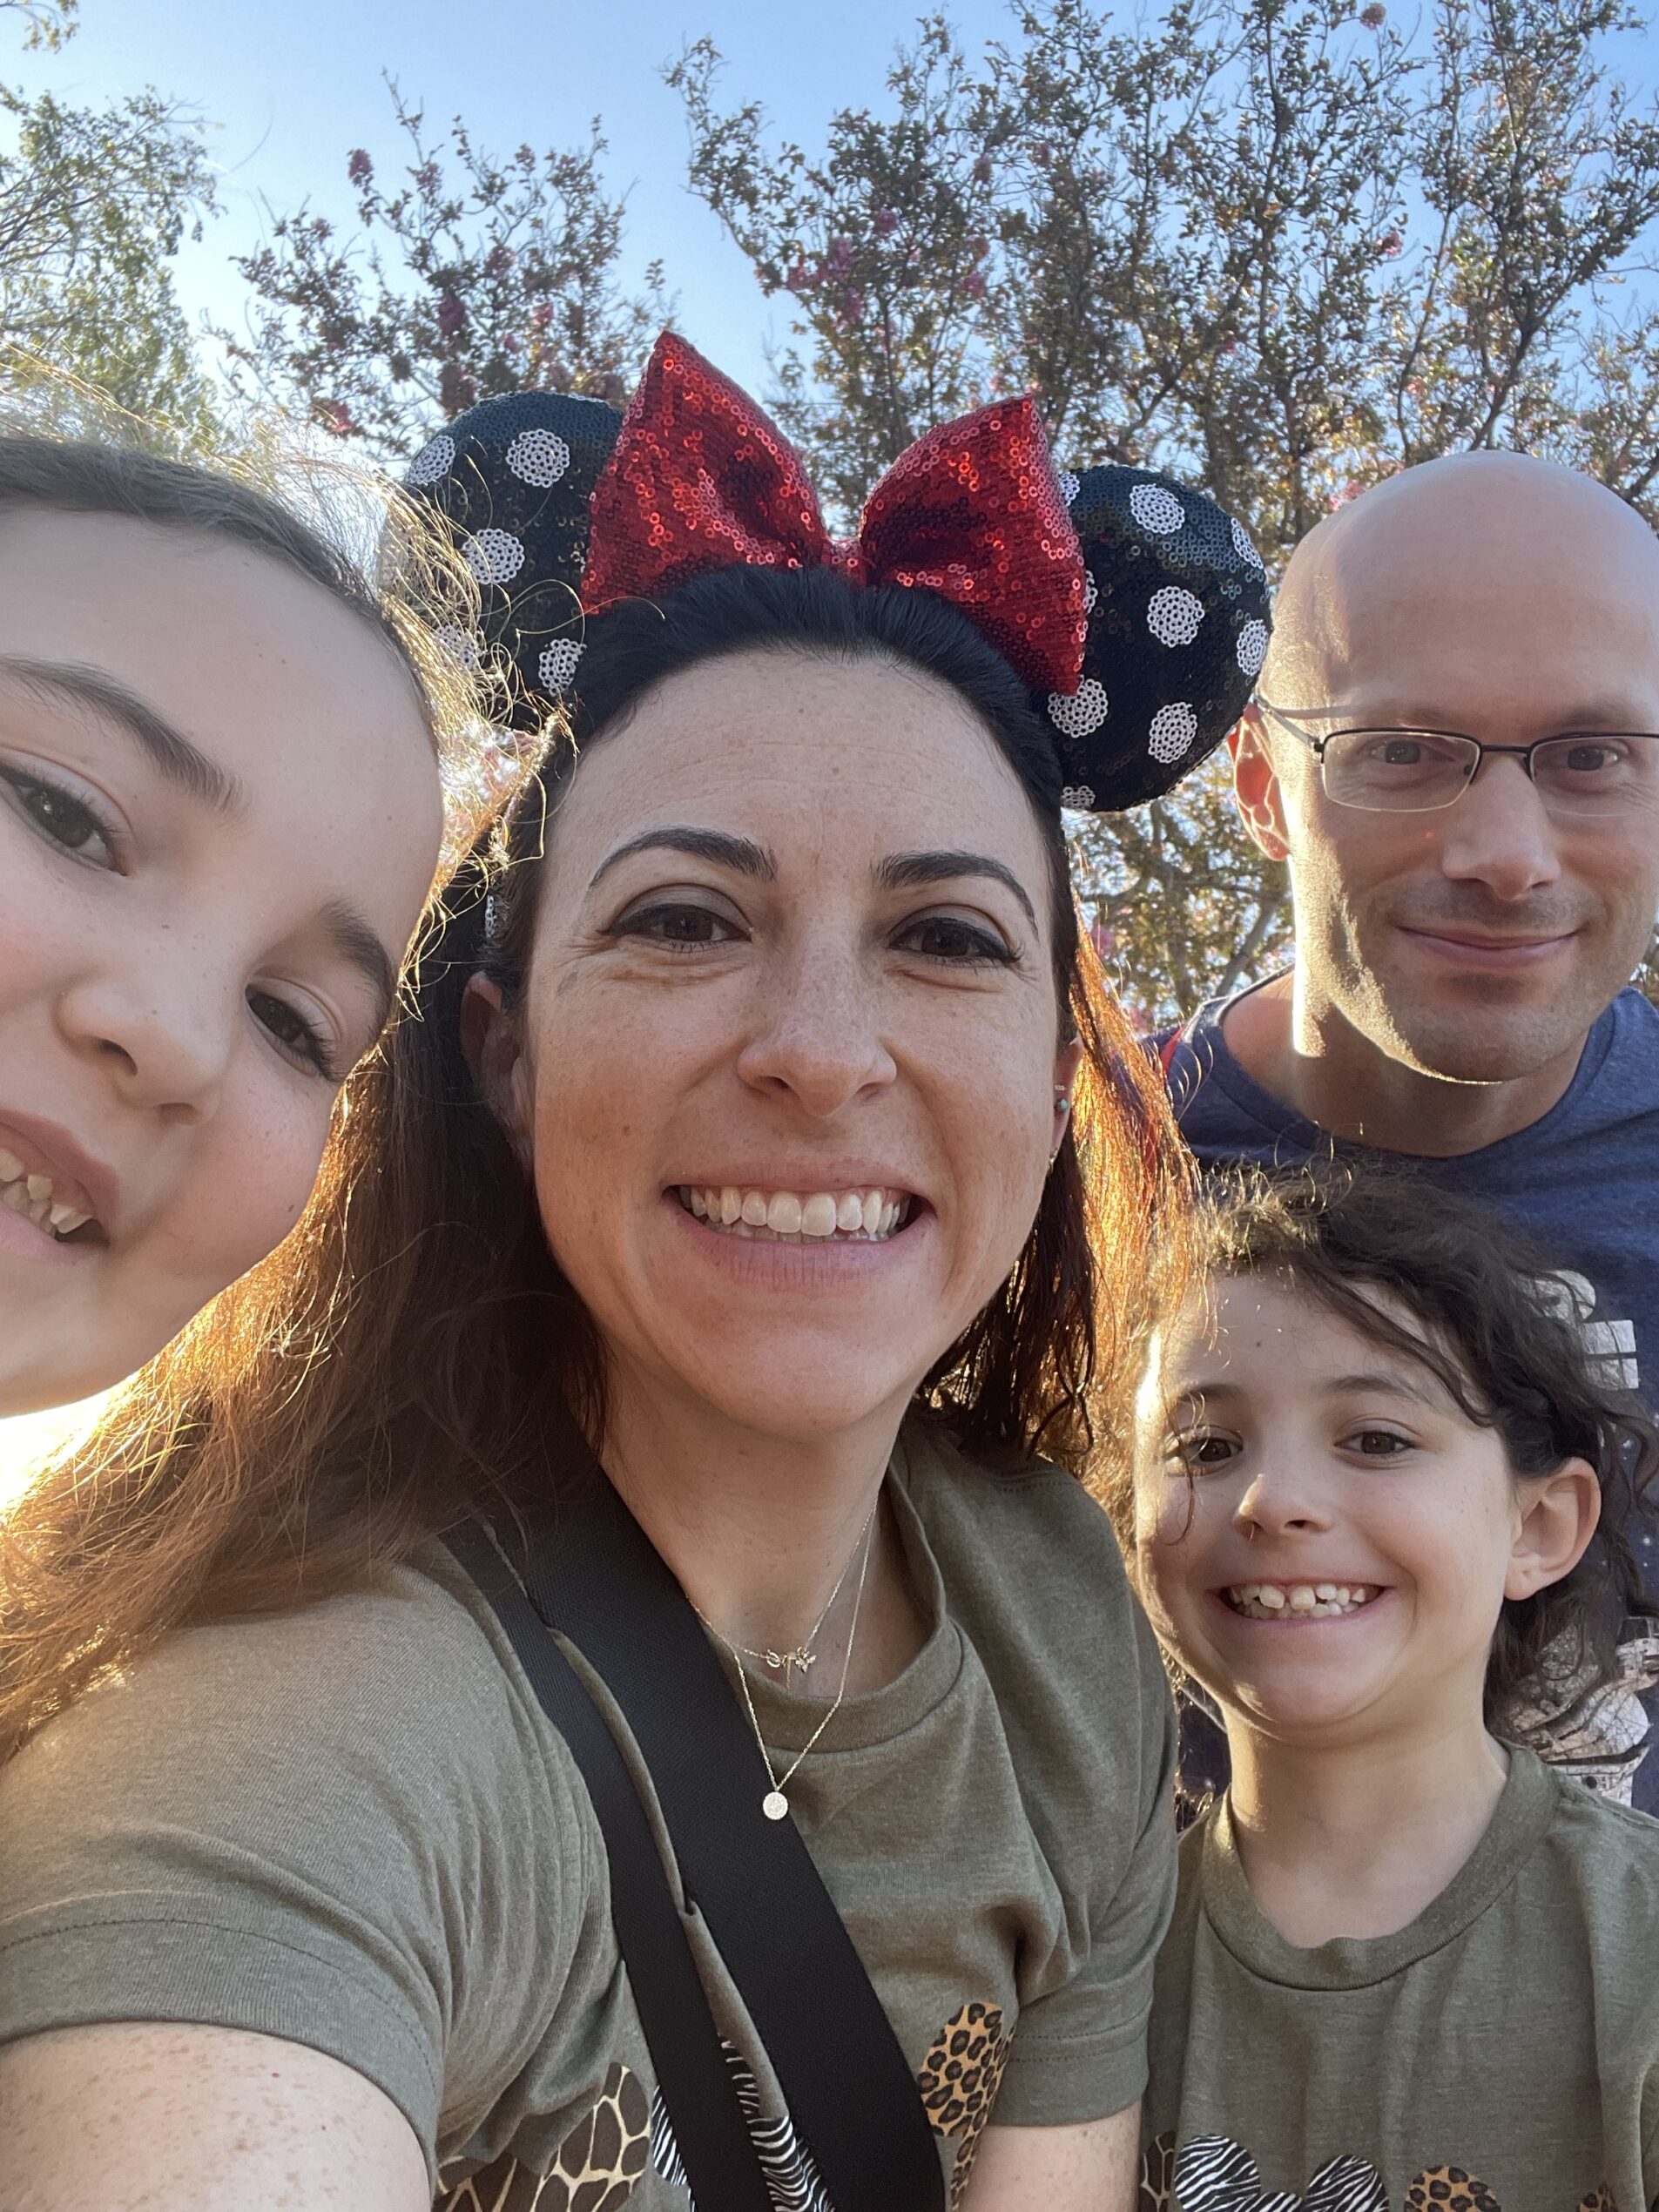 Ryan with Family at Disneyland